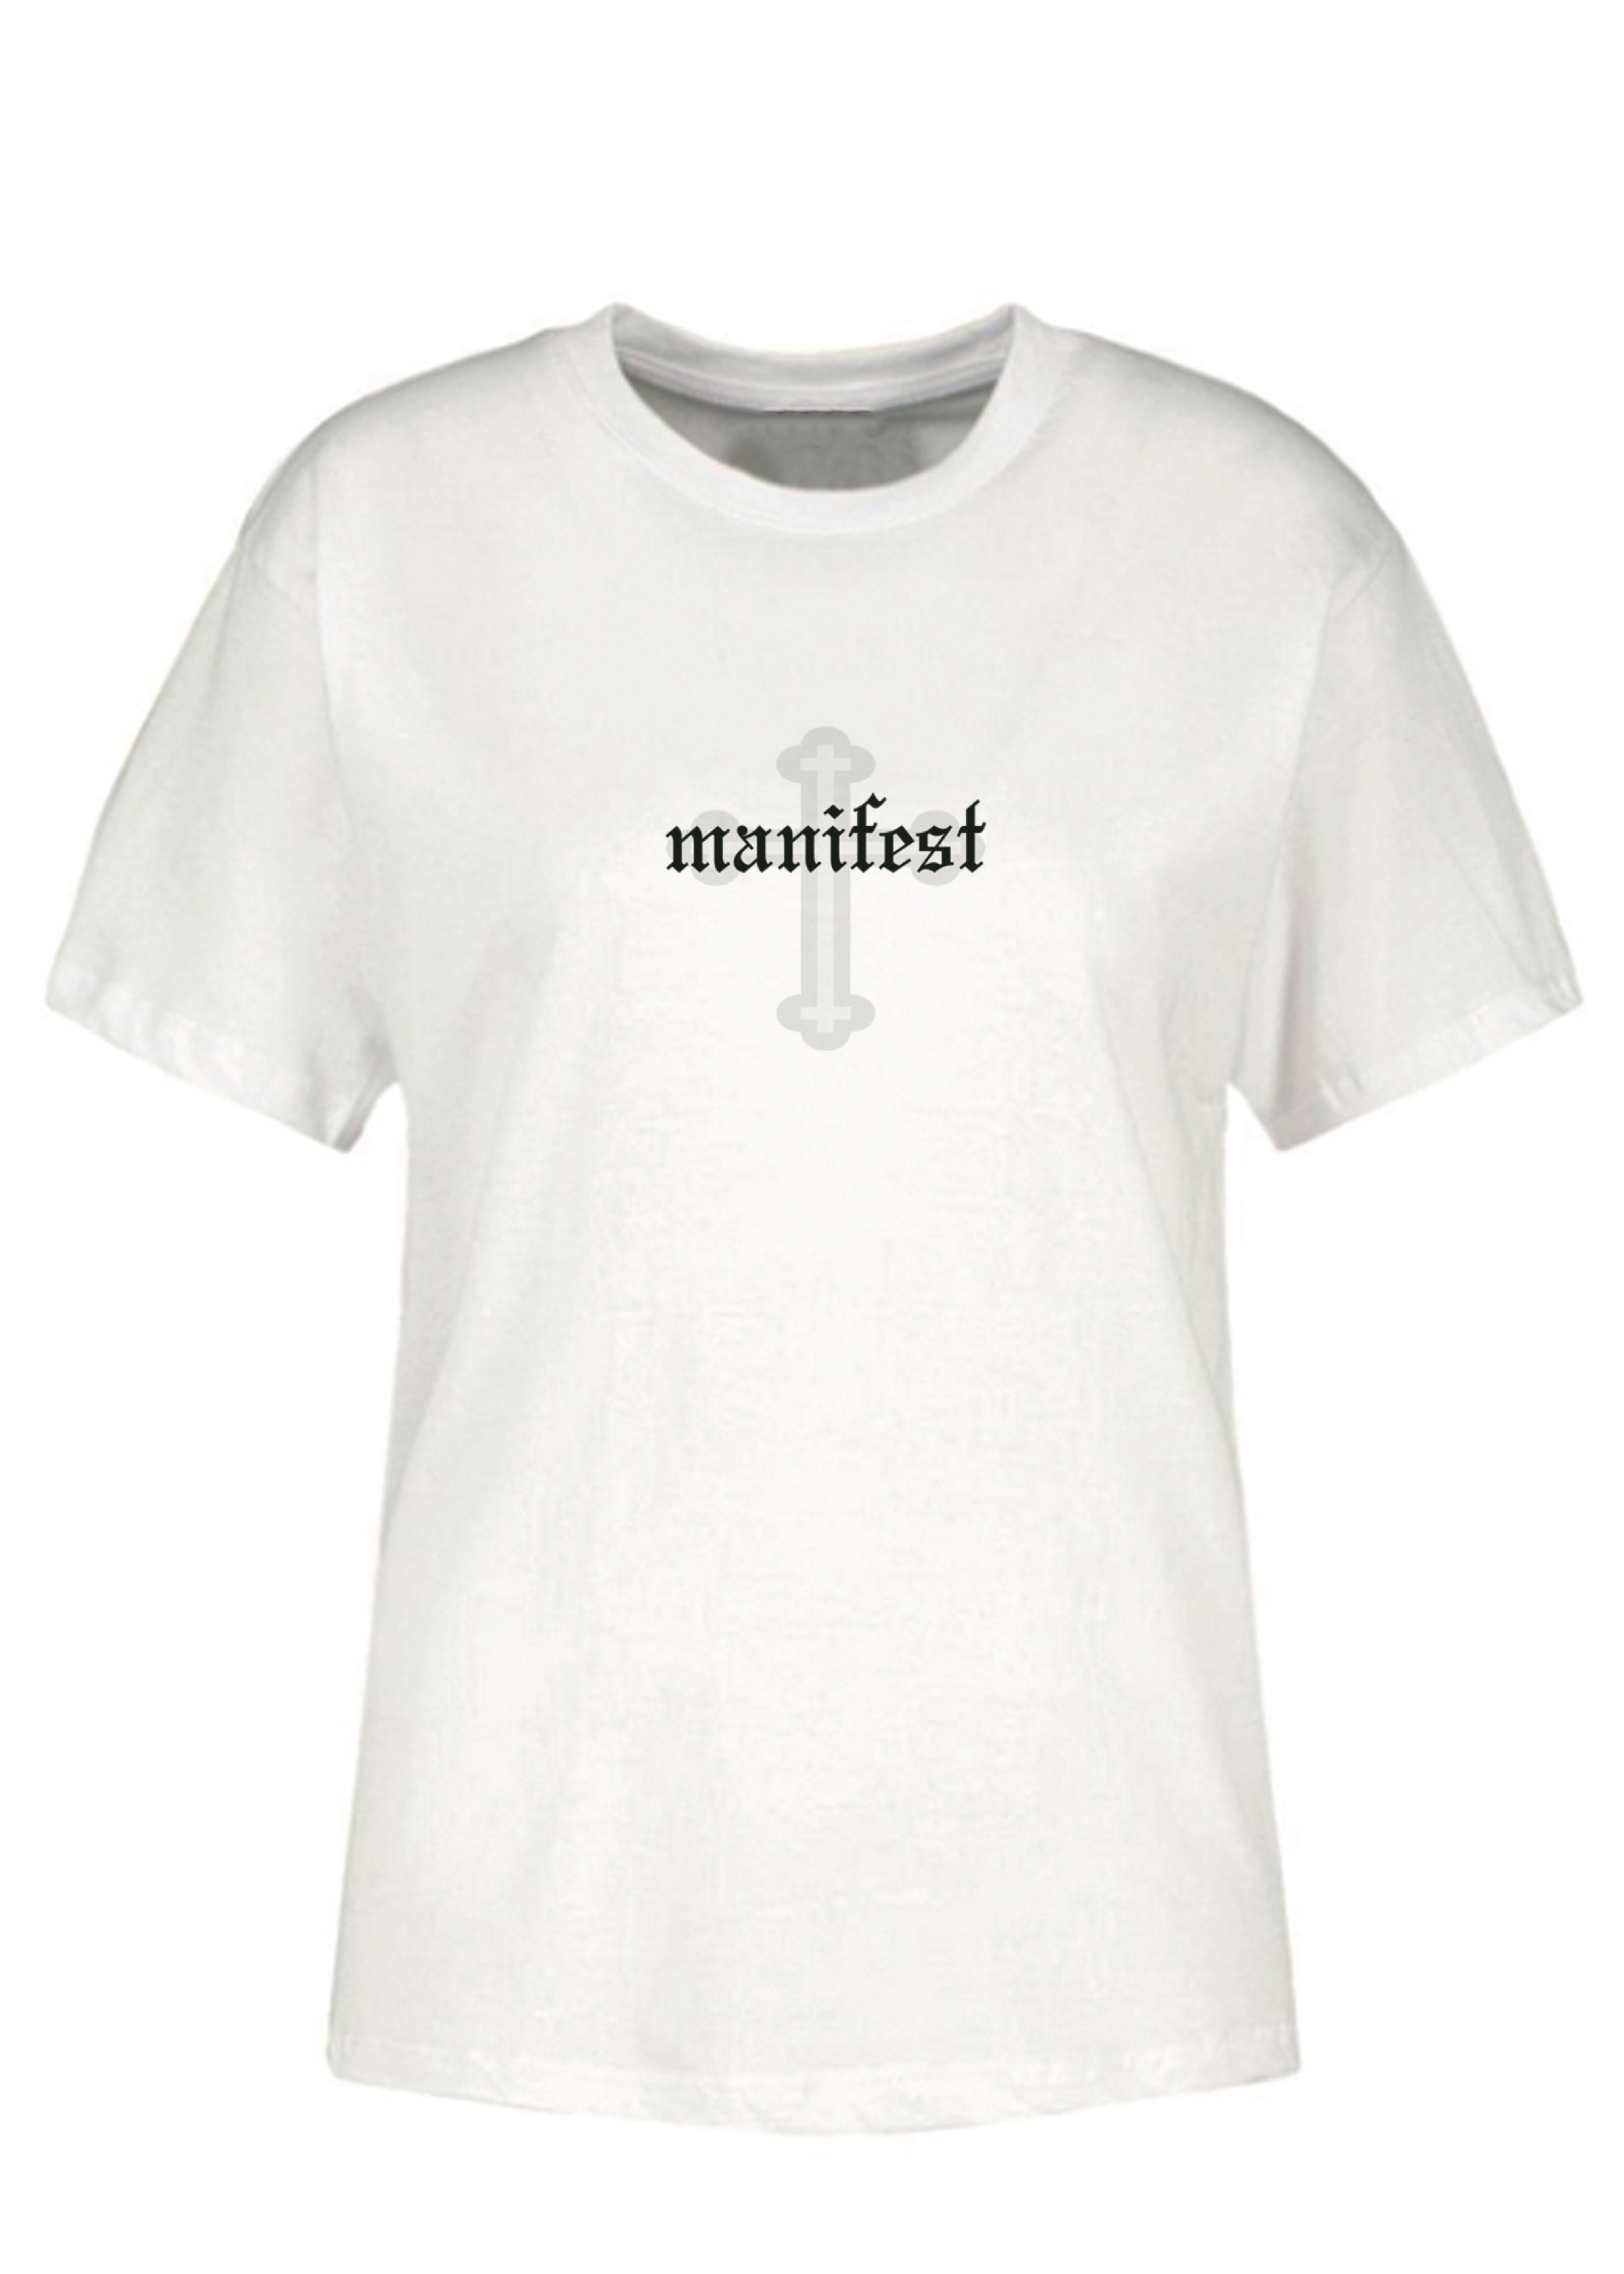 Manifest T-shirt